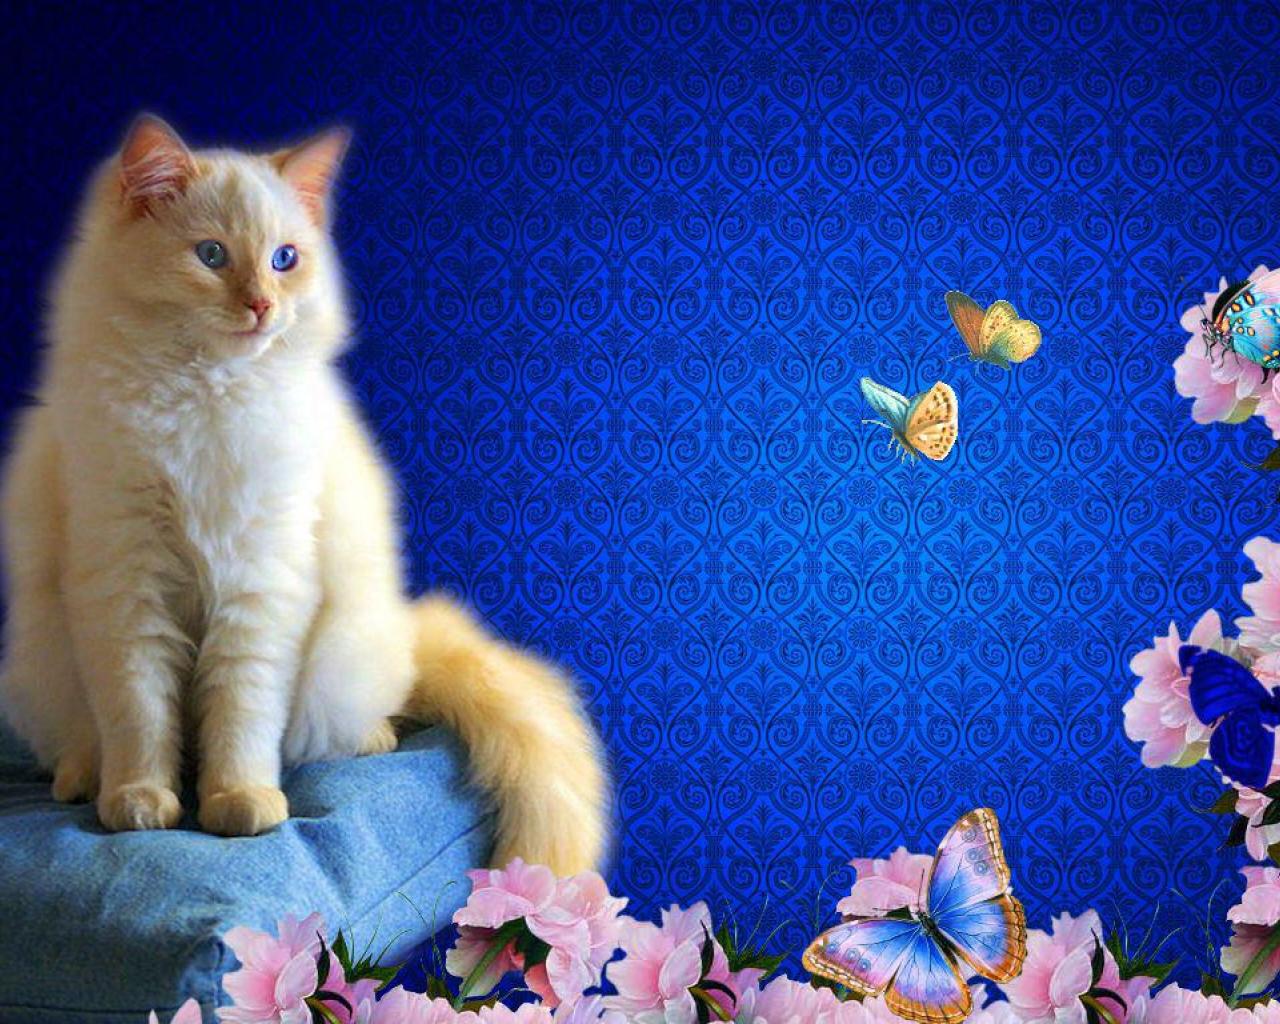 Cat and Butterfly Wallpaper - WallpaperSafari